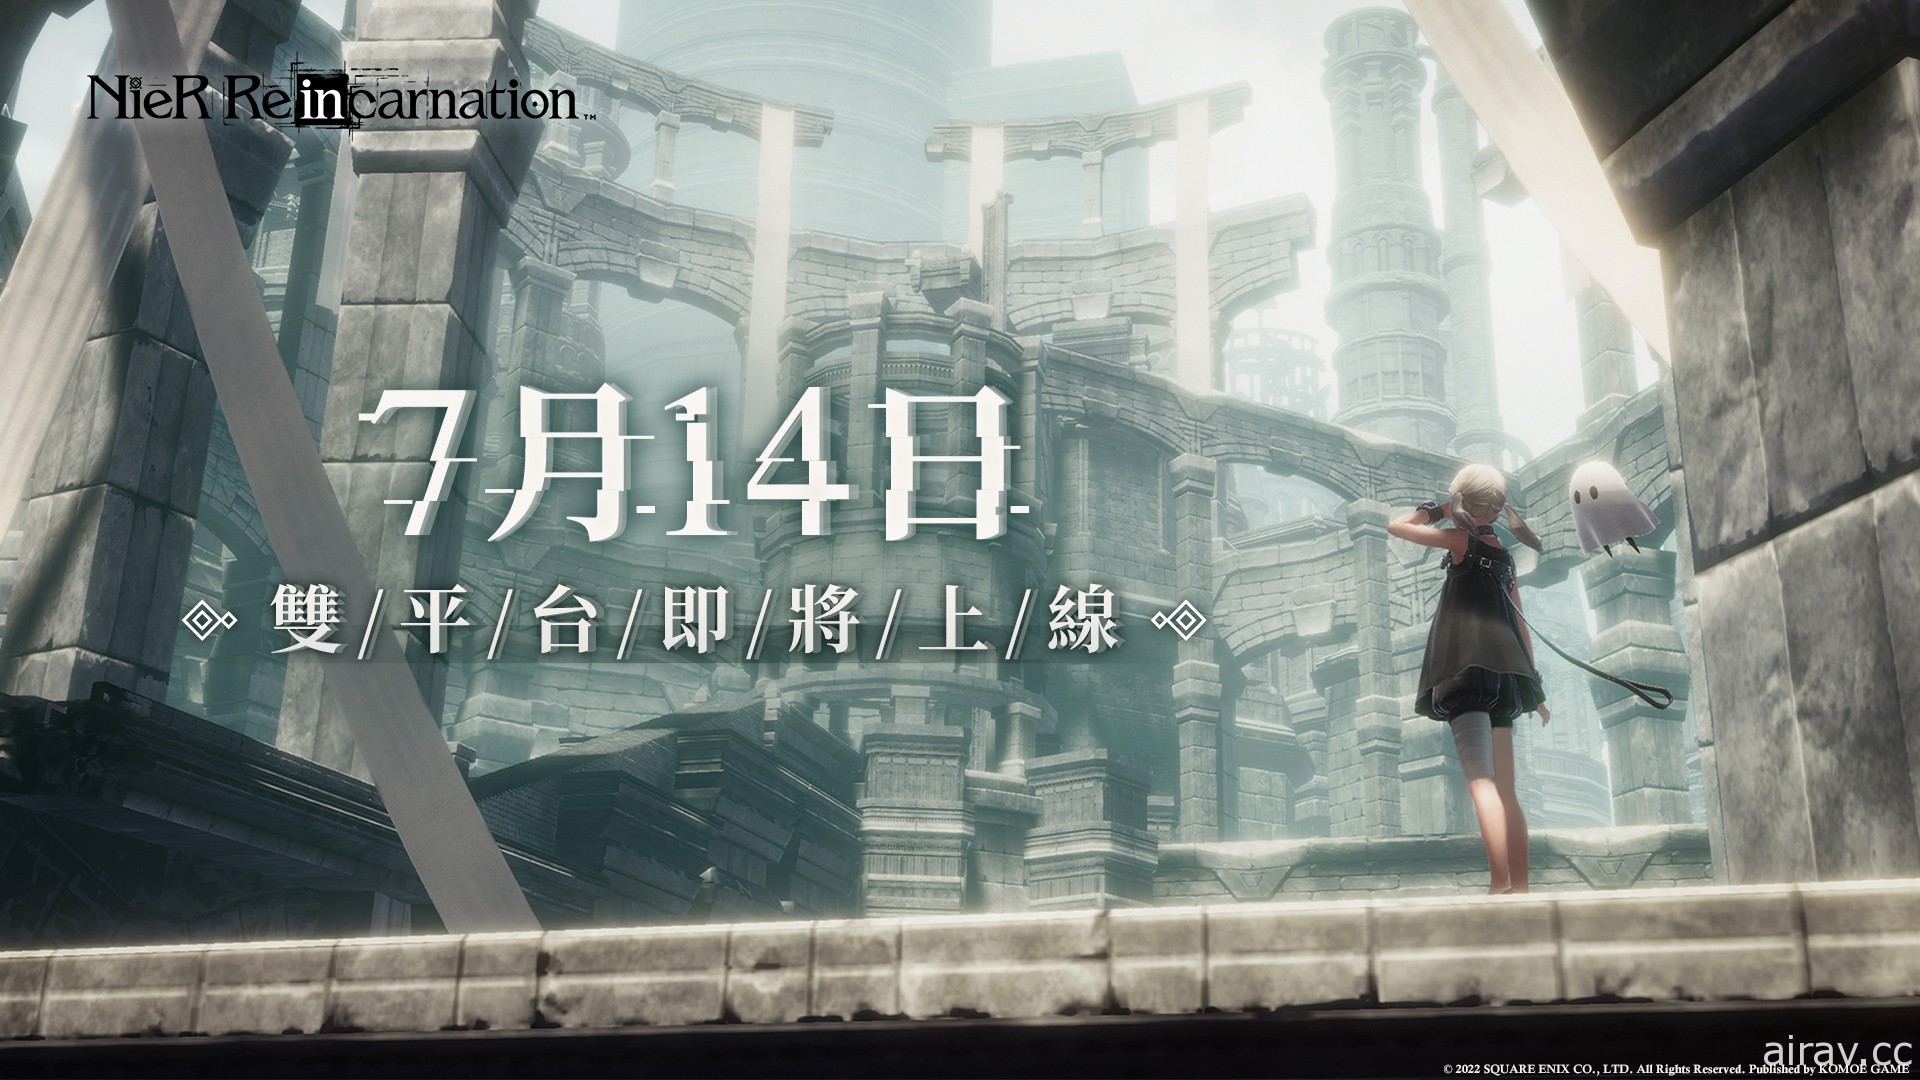 《NieR Re [in] carnation》繁中版宣布 7/14 上线 同步释出制作团队与声优祝福影片